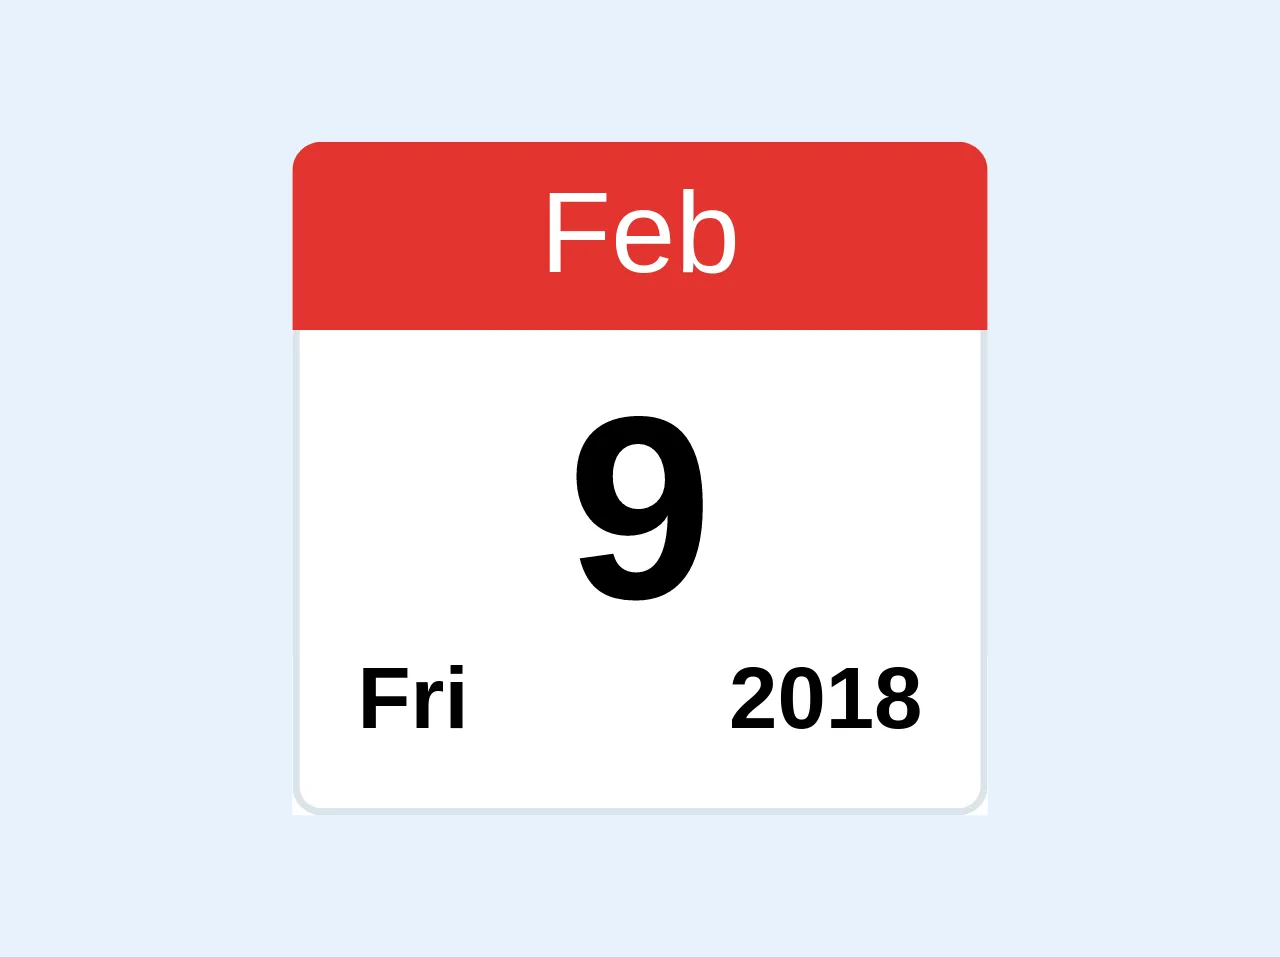 Calendar Date